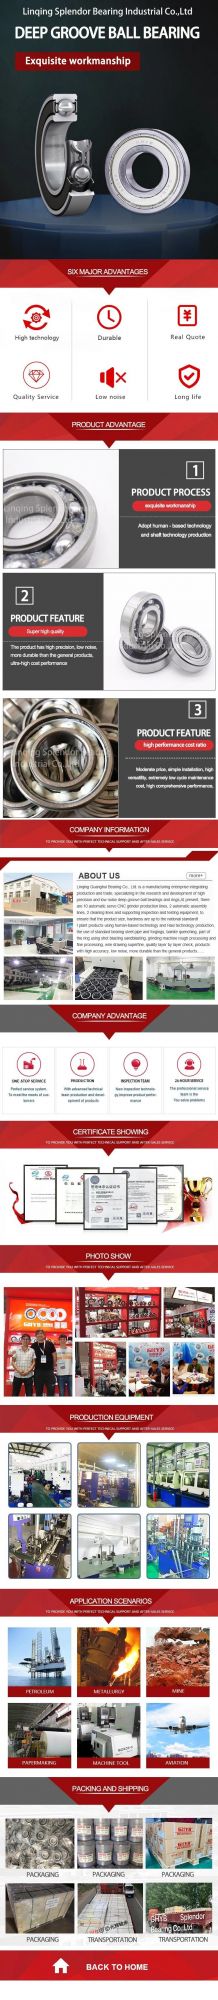 China Factory Distributor Supplier of Deep Groove Ball Bearings for Motors, Compressors, Alternators 6301-2rz/P6/Z2V2